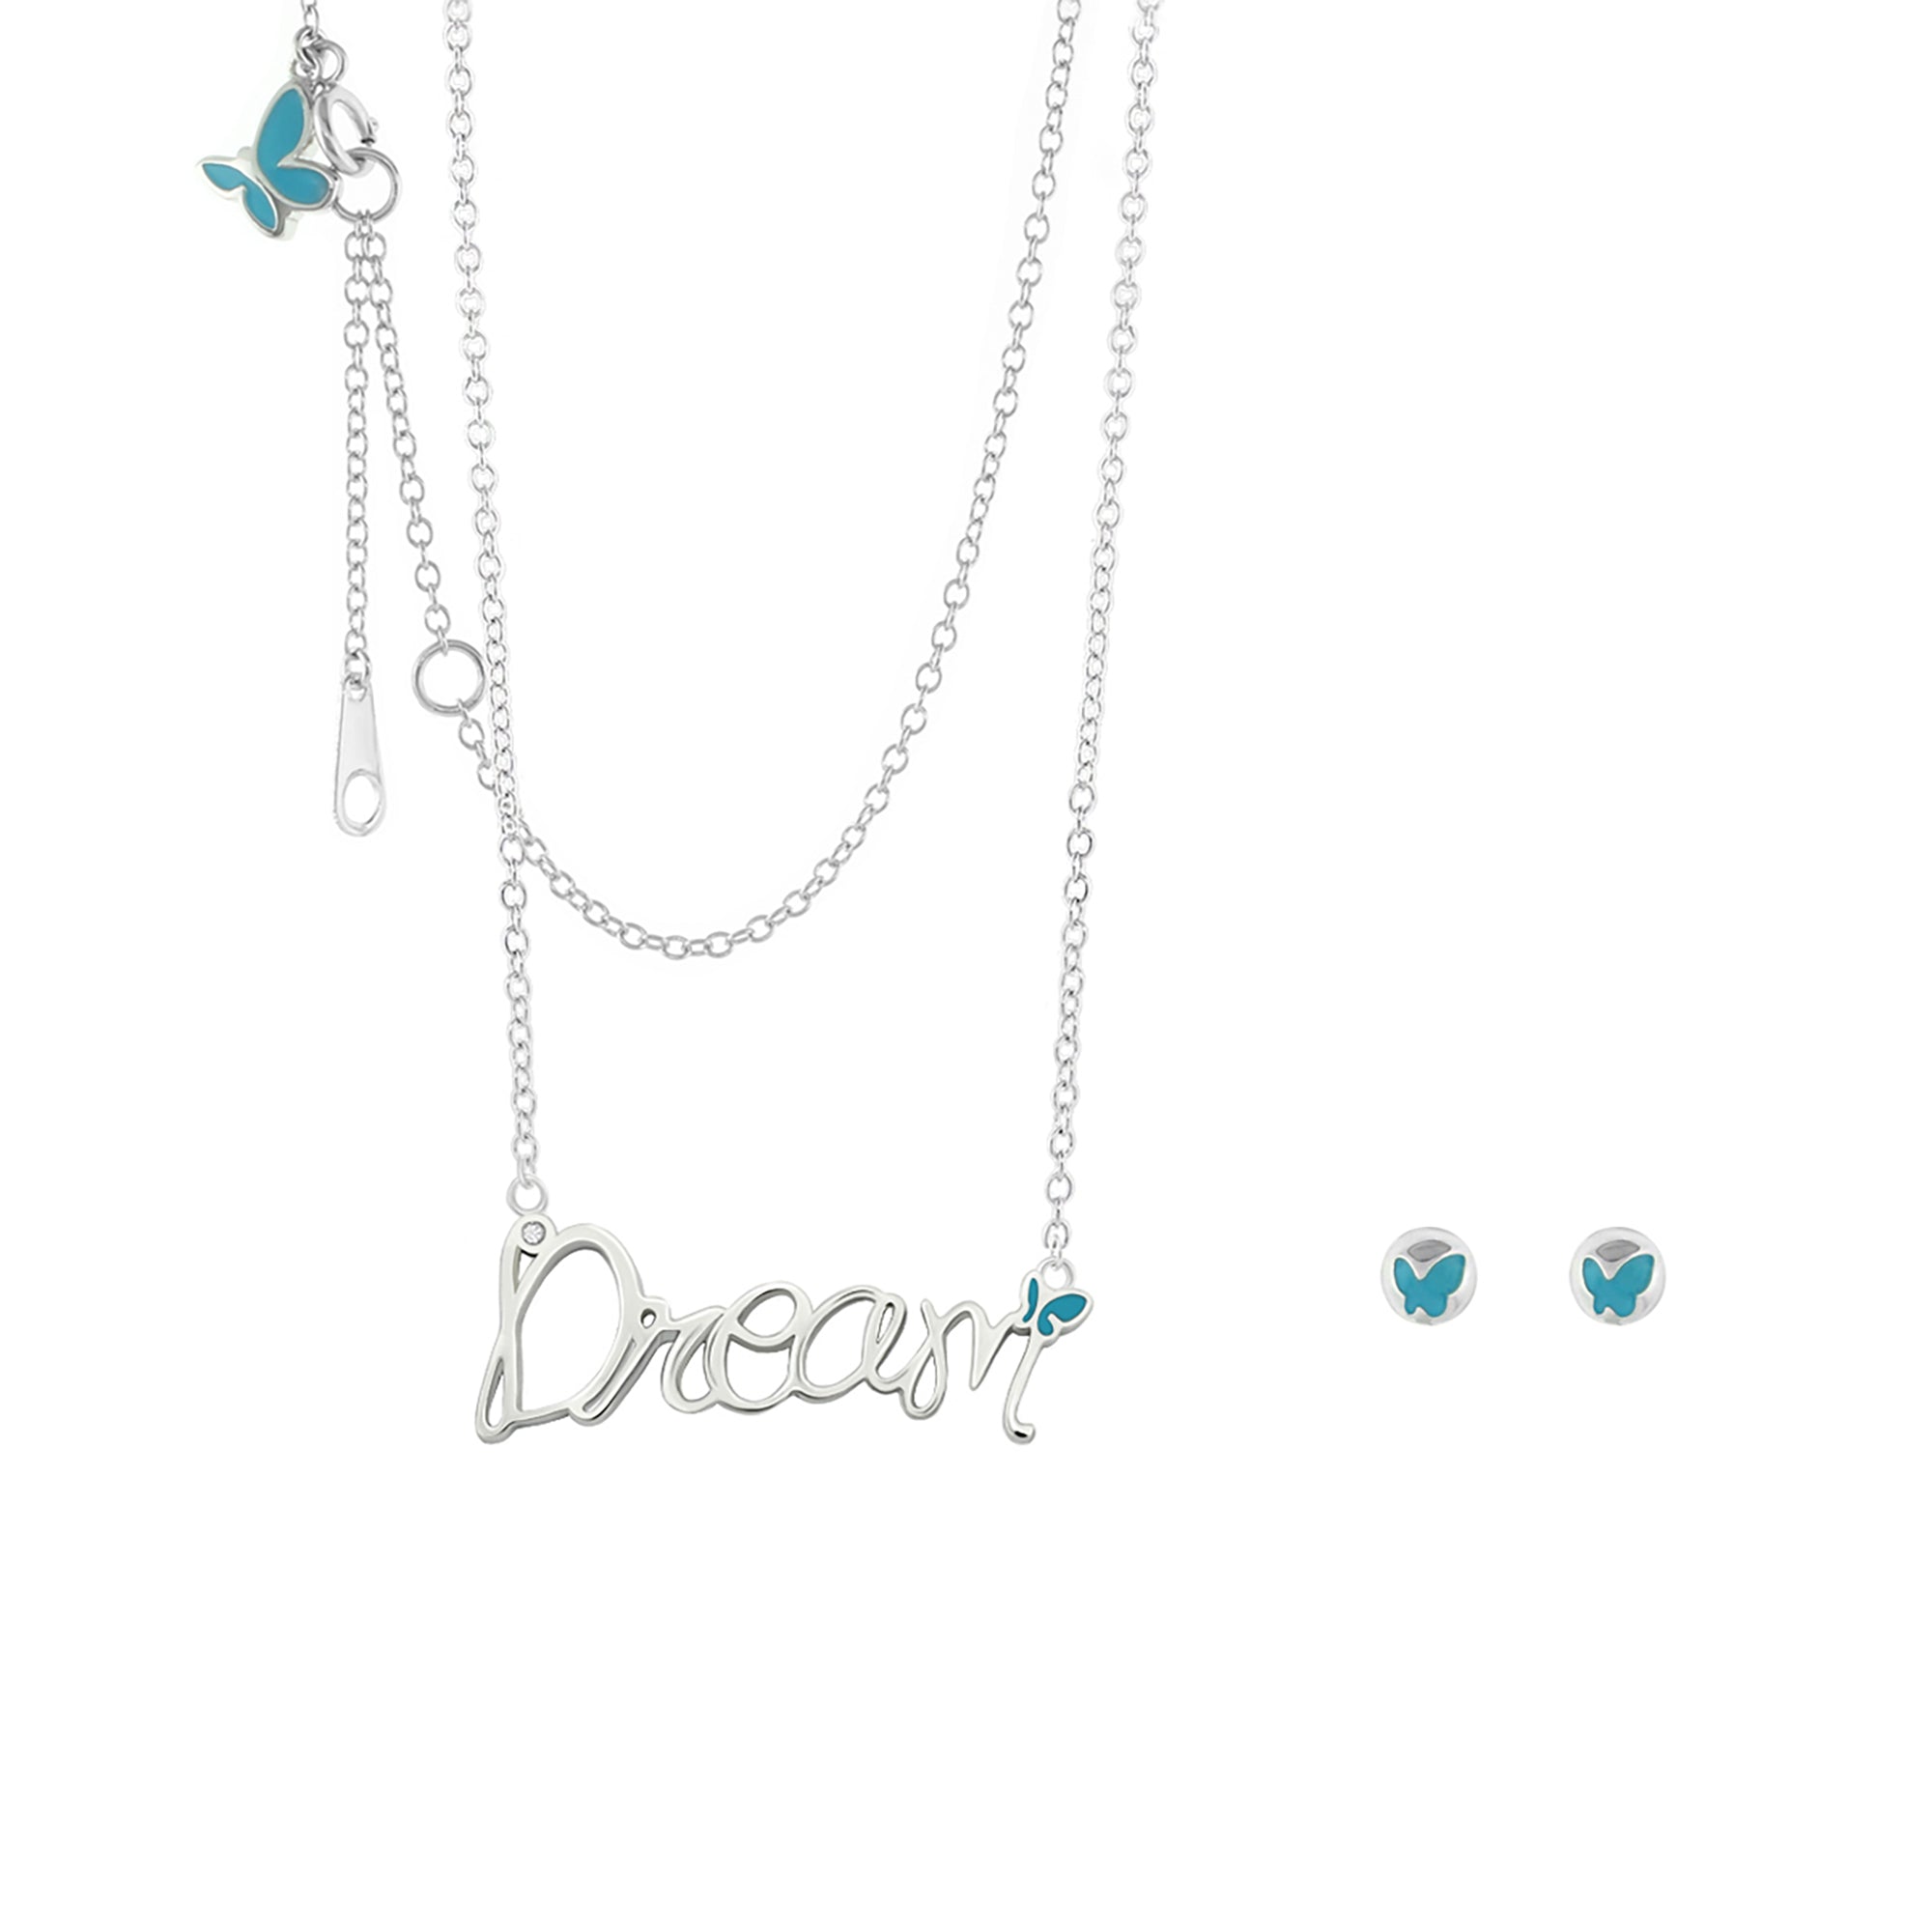 Sydney Leigh Dream Necklace & Earrings Set